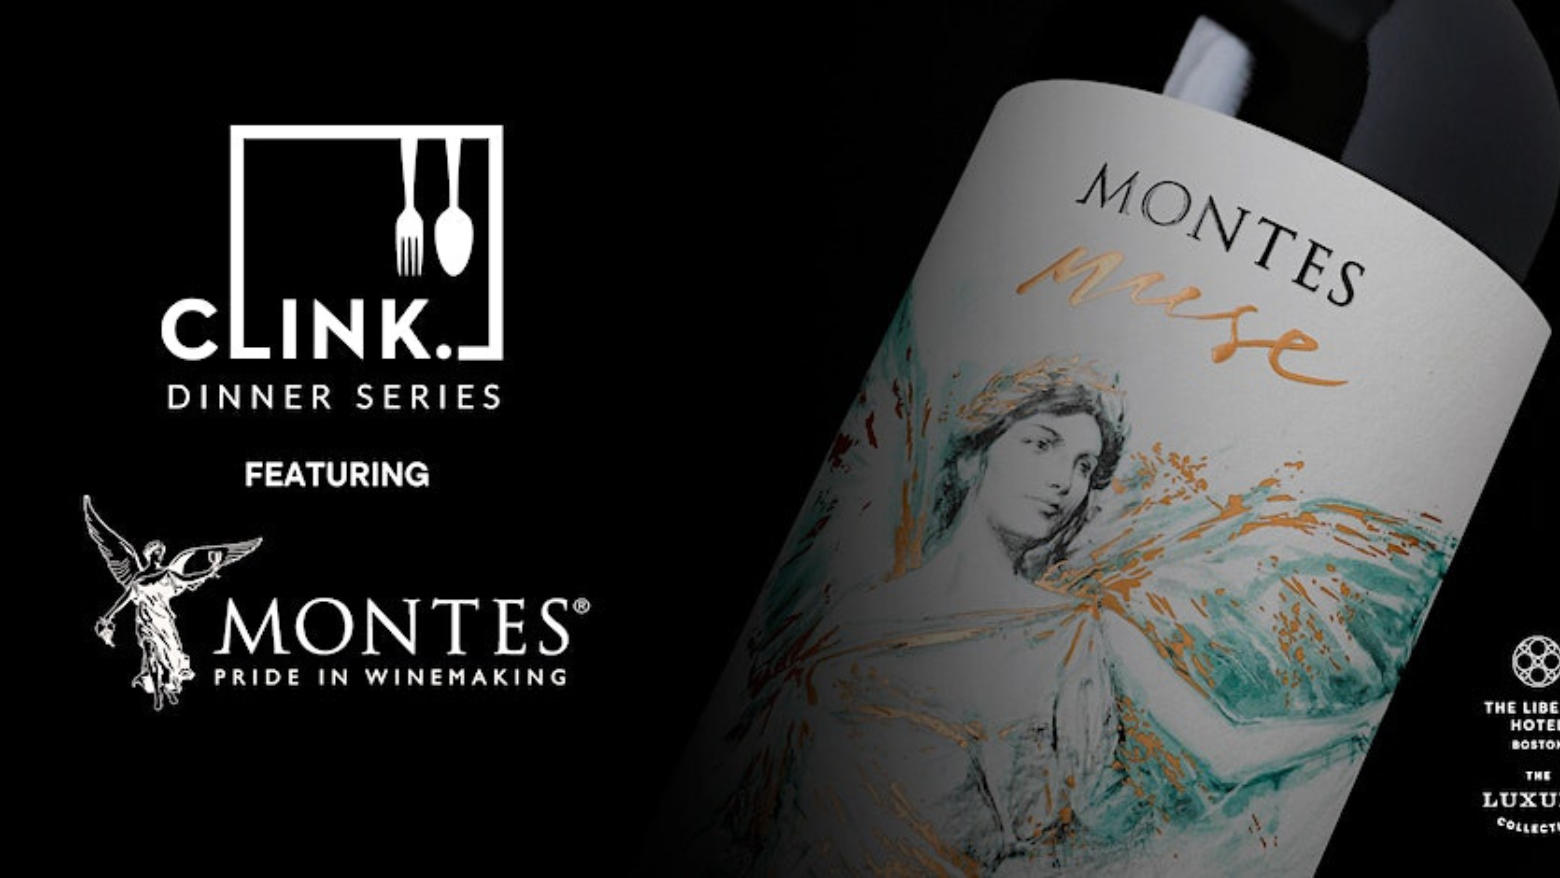 Clink餐厅举办蒙特斯葡萄酒晚宴-波士顿餐厅新闻与活动